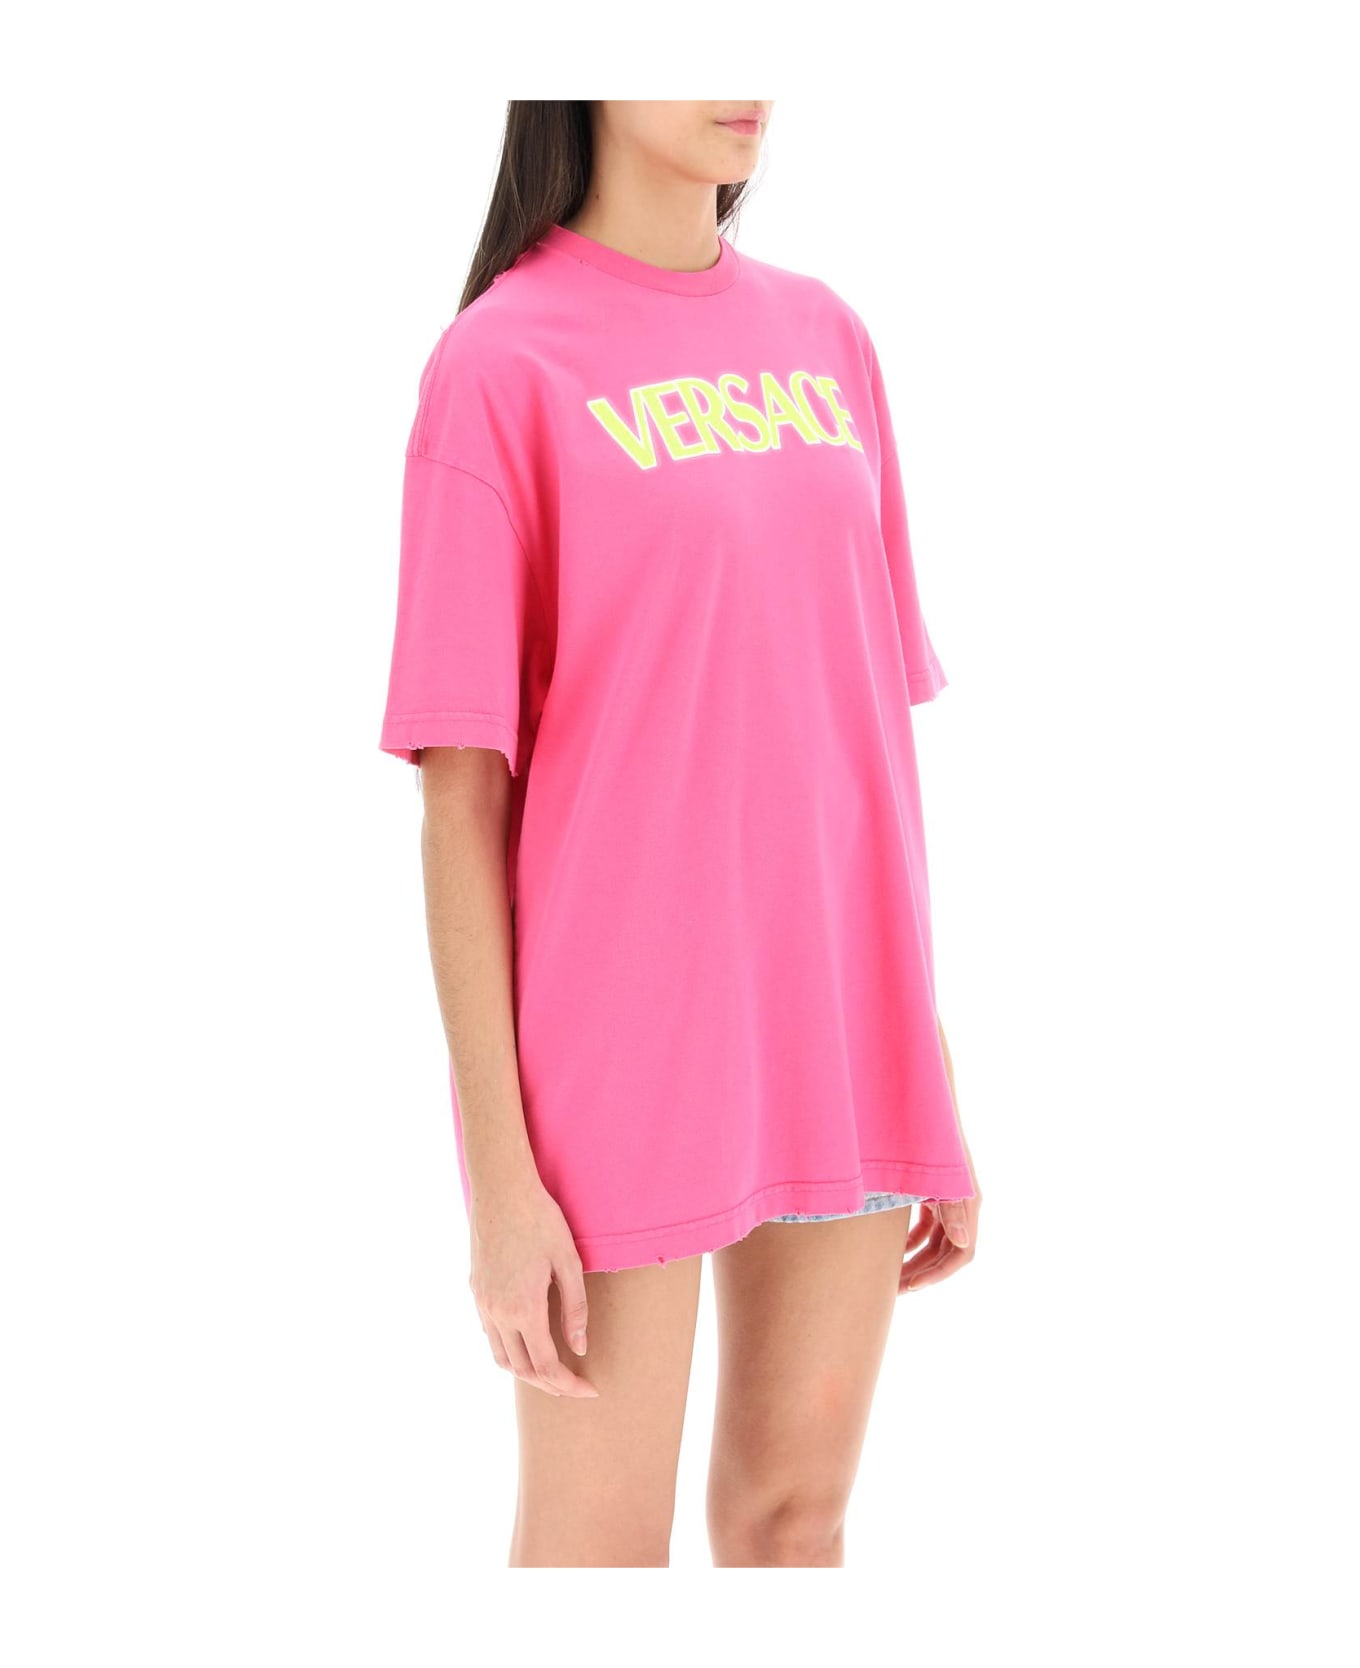 Versace Logo Cotton T-shirt - Pink Tシャツ